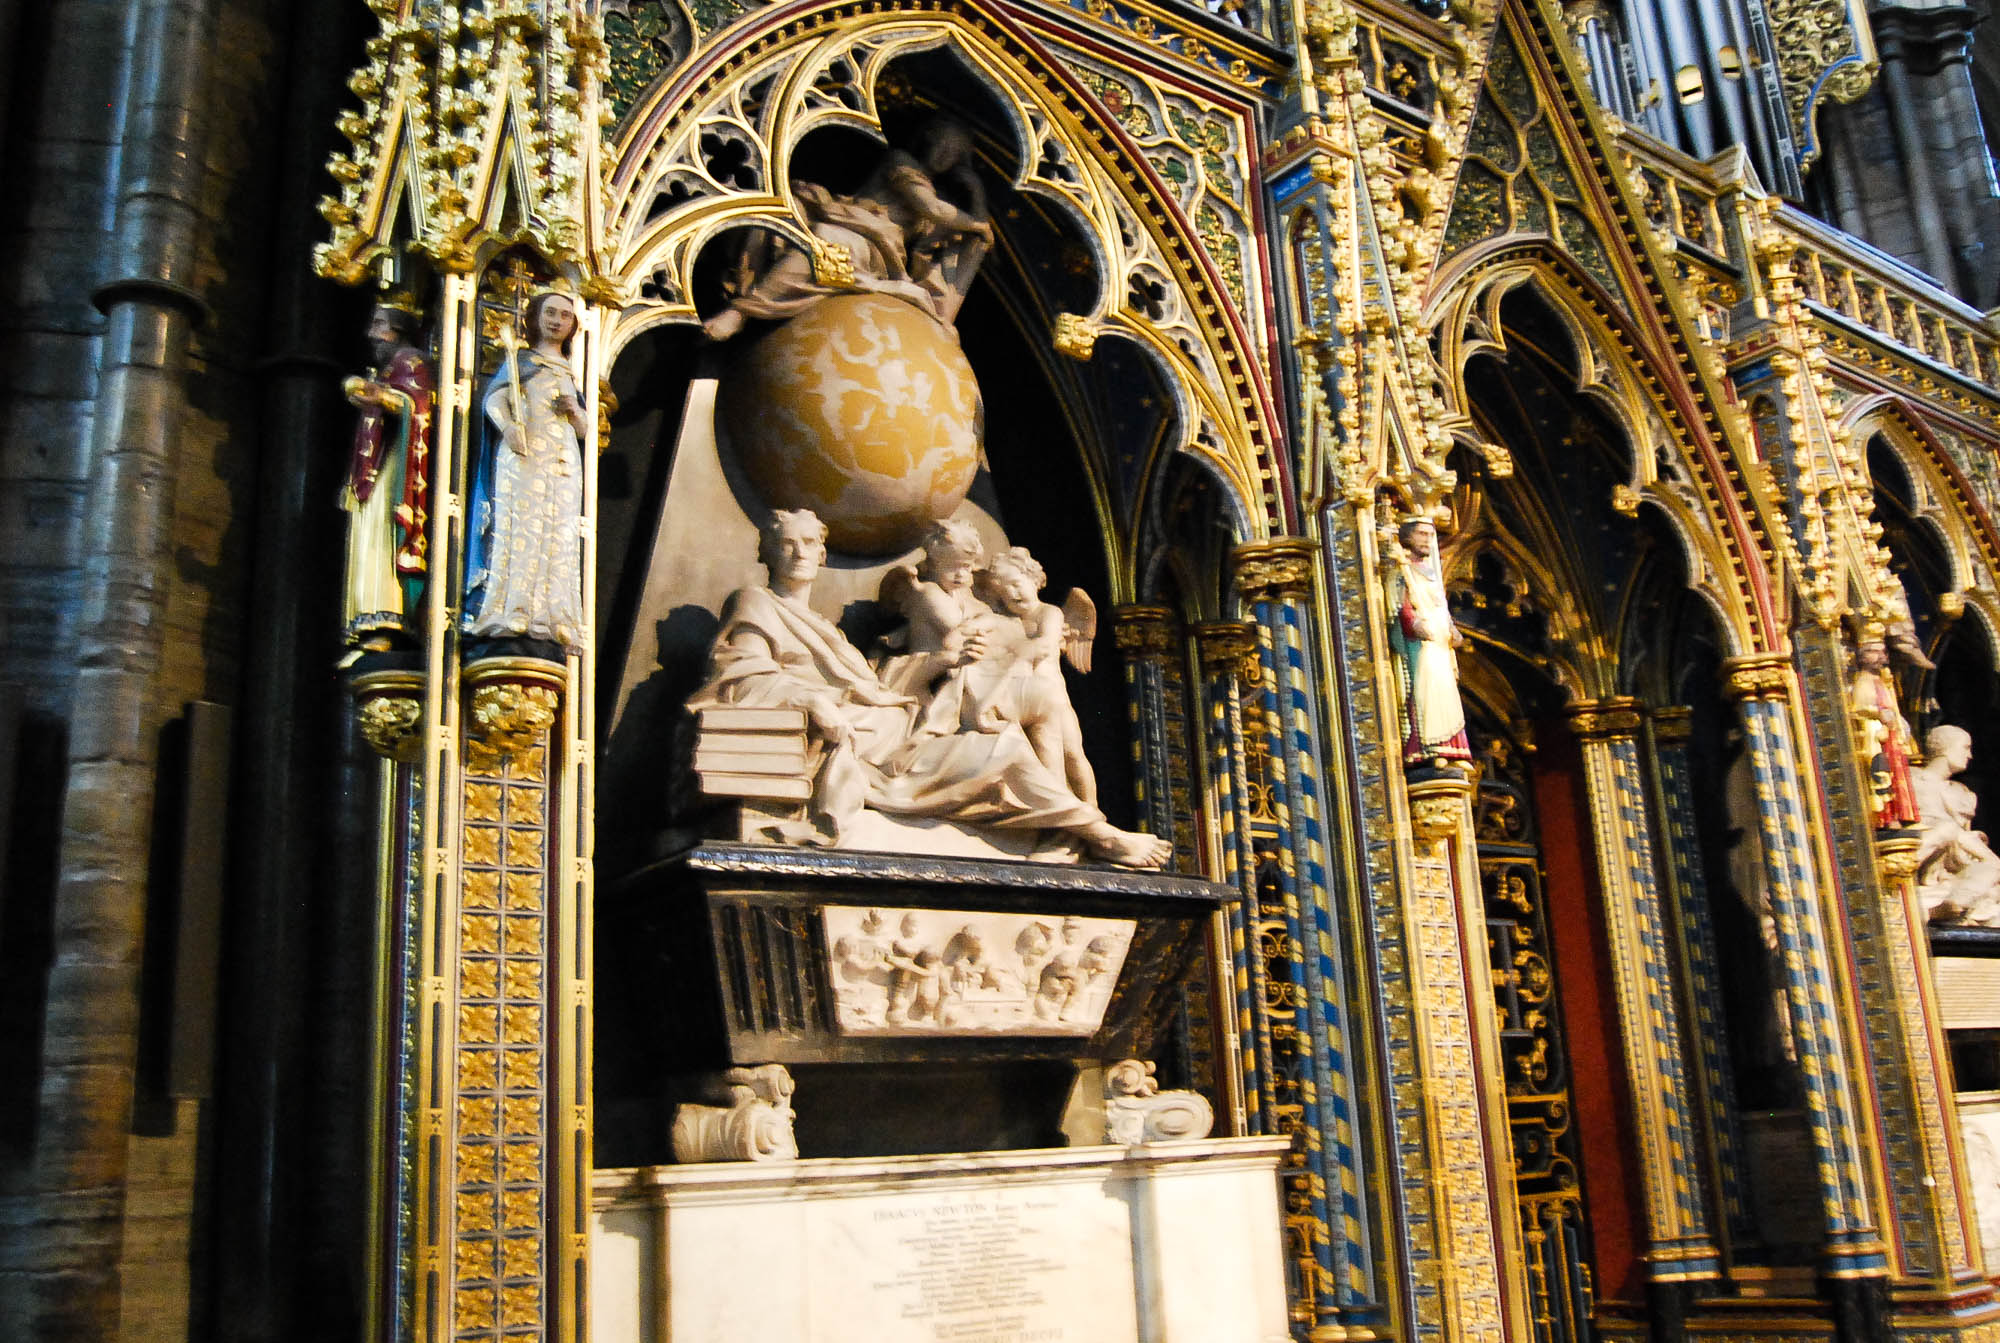 hrobka Isaaca Newtona vo Westminster Abbey